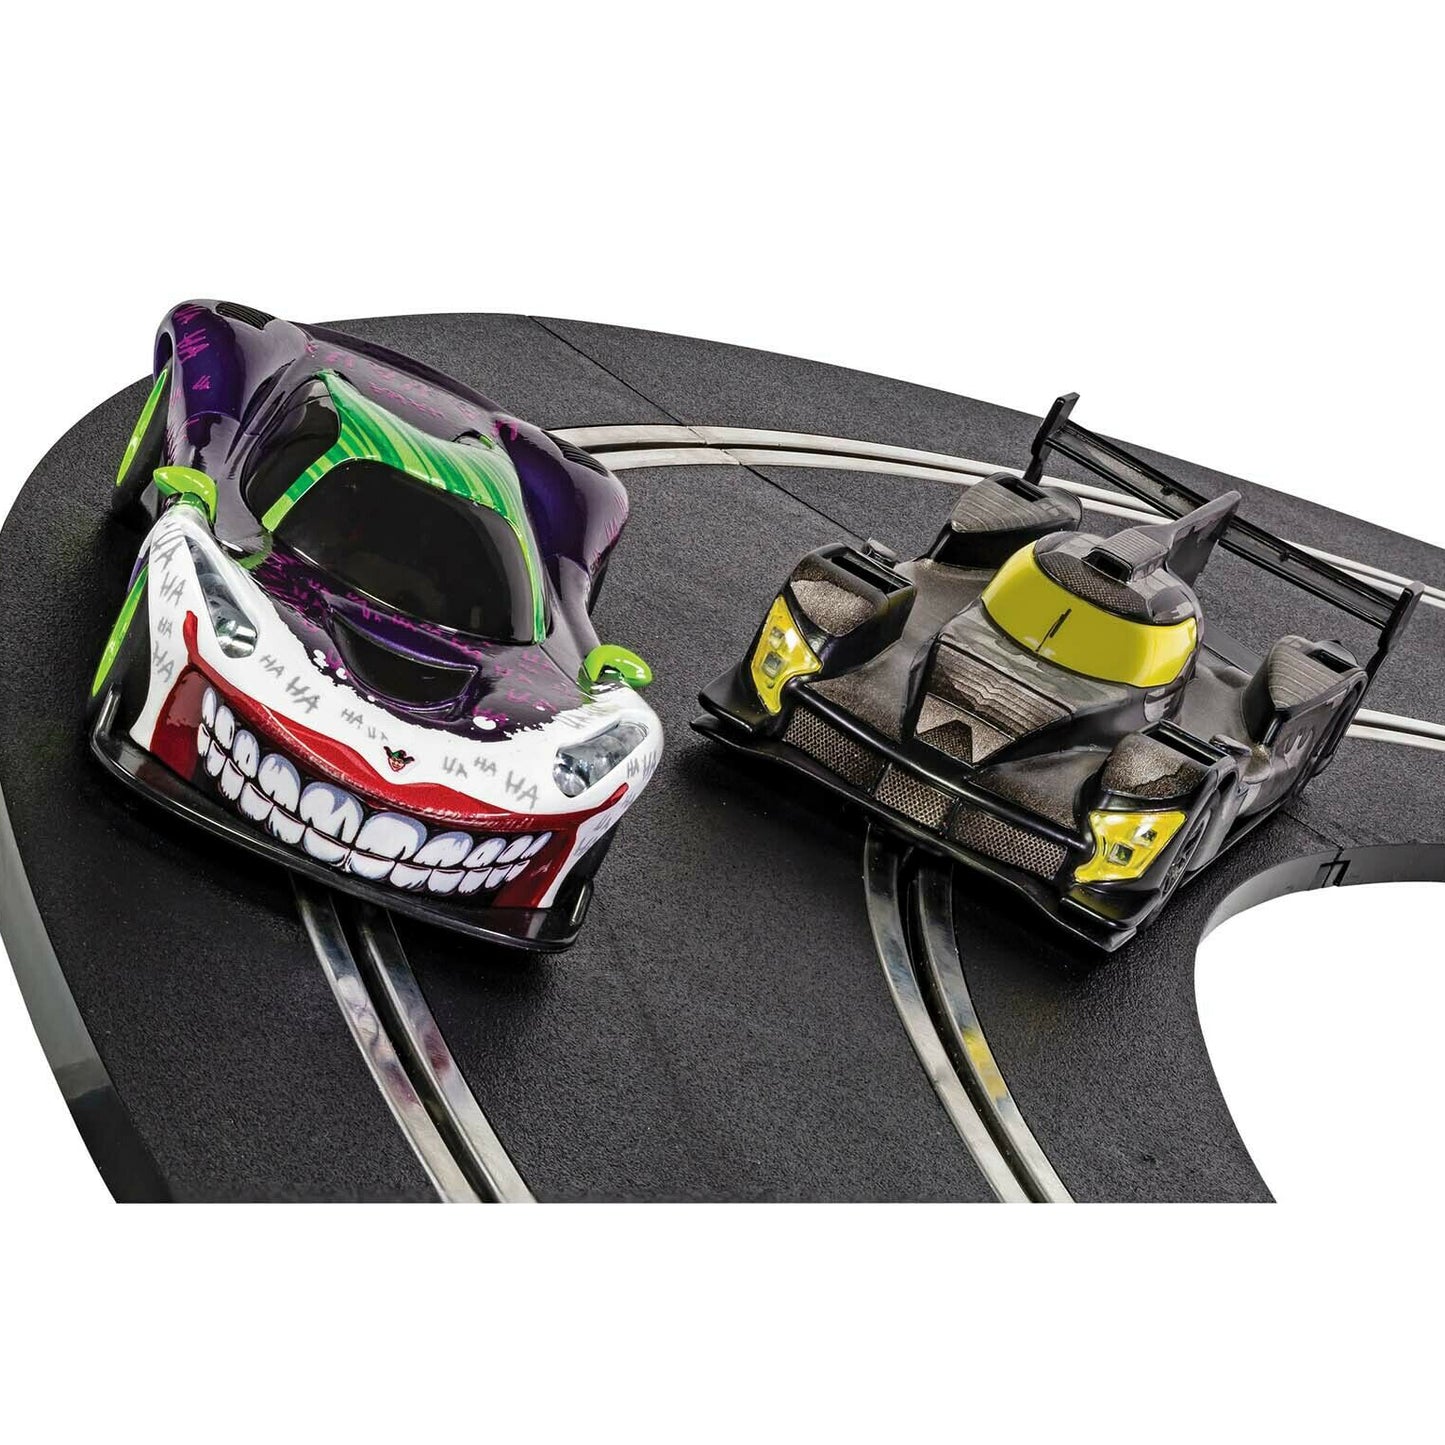 Scalextric Sport 1:32 Figure-Of-Eight Layout Set + Batman & Joker Cars DIGITAL